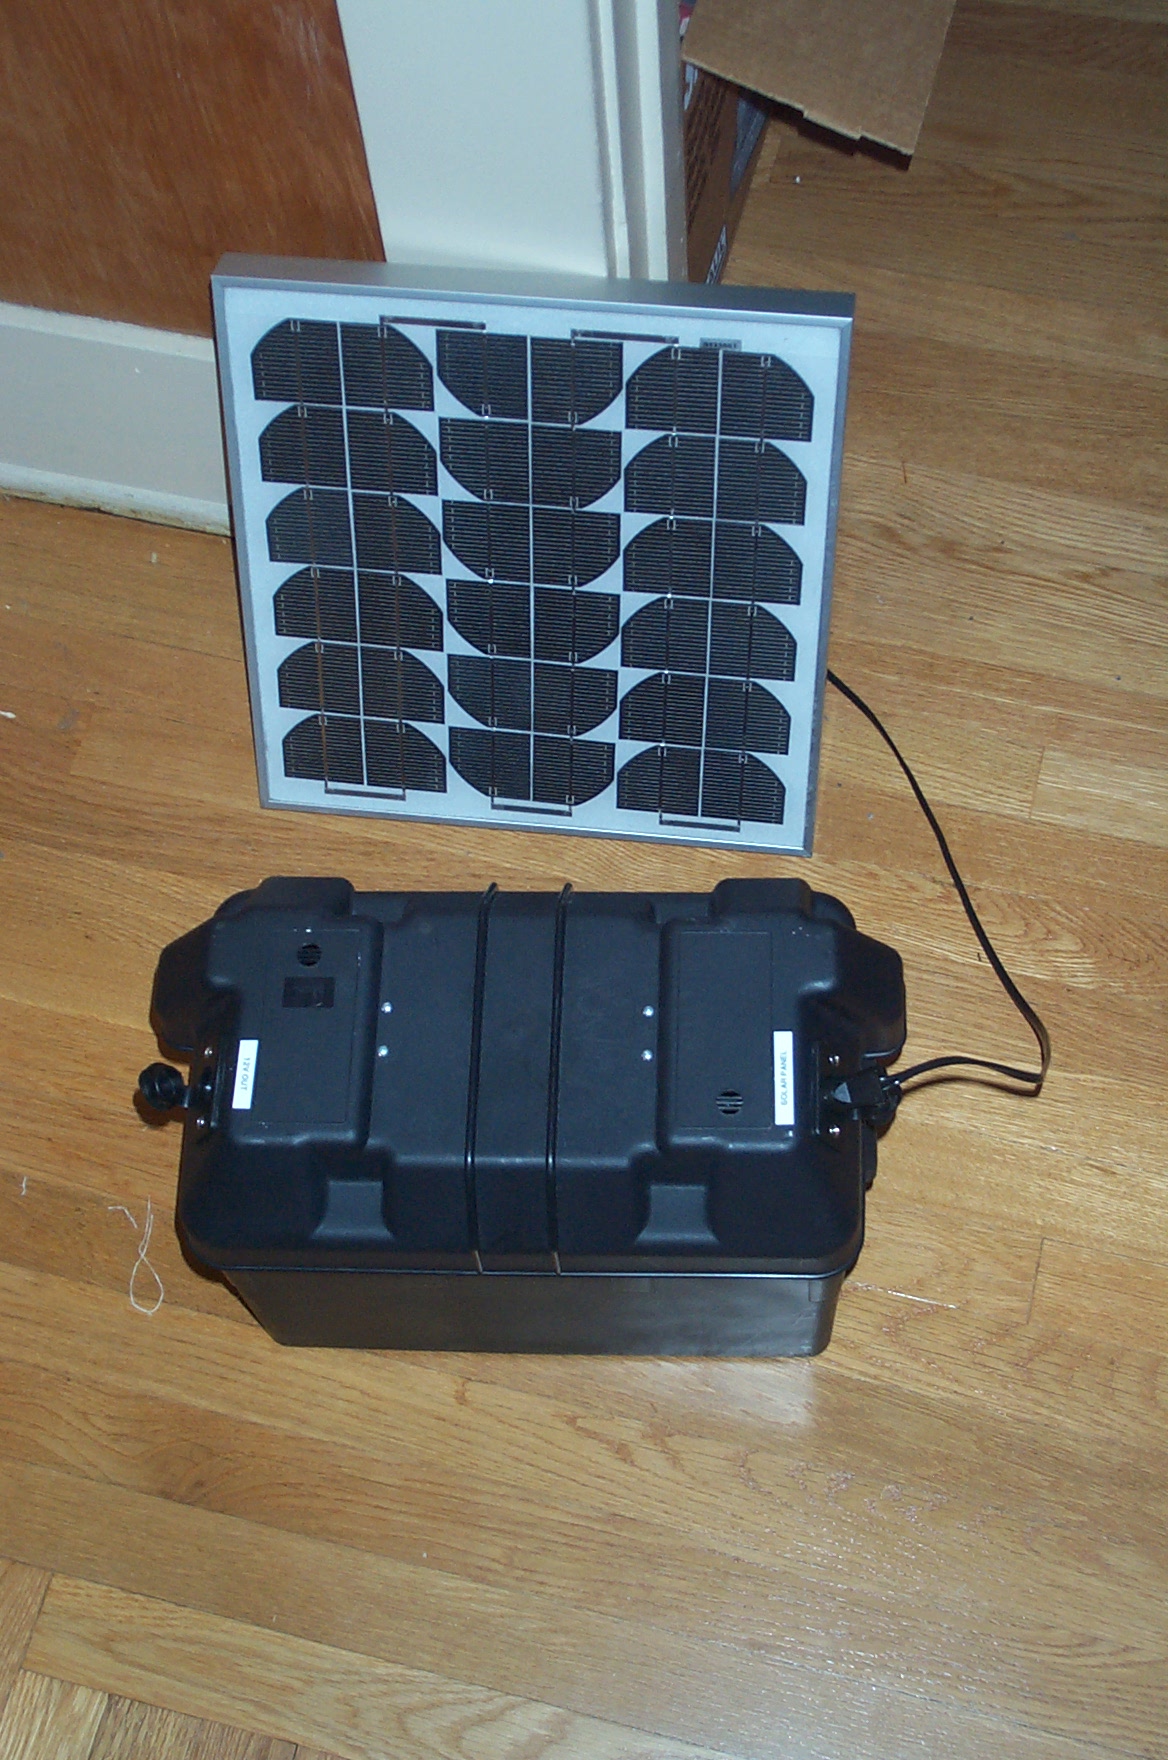 Аккумулятор для солнечных батарей. Аккумуляторные батареи для солнечных батарей. Аккумулятор для солнечной батарейки. Солнечная панель к аккумулятор для АВТОХОЛОДИЛЬНИКА.